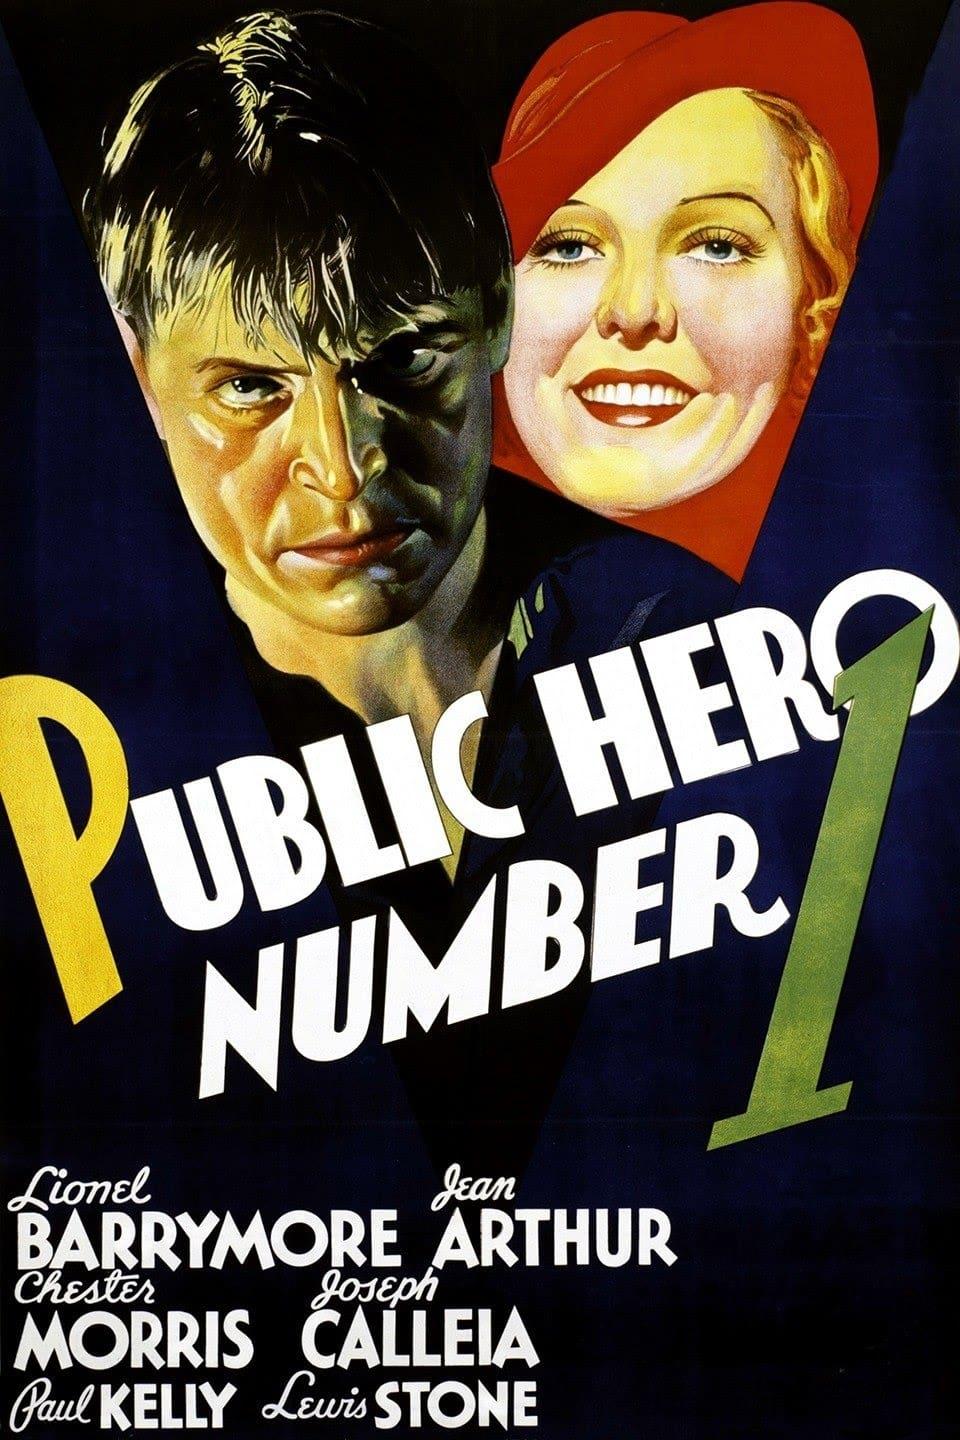 Public Hero Number 1 poster